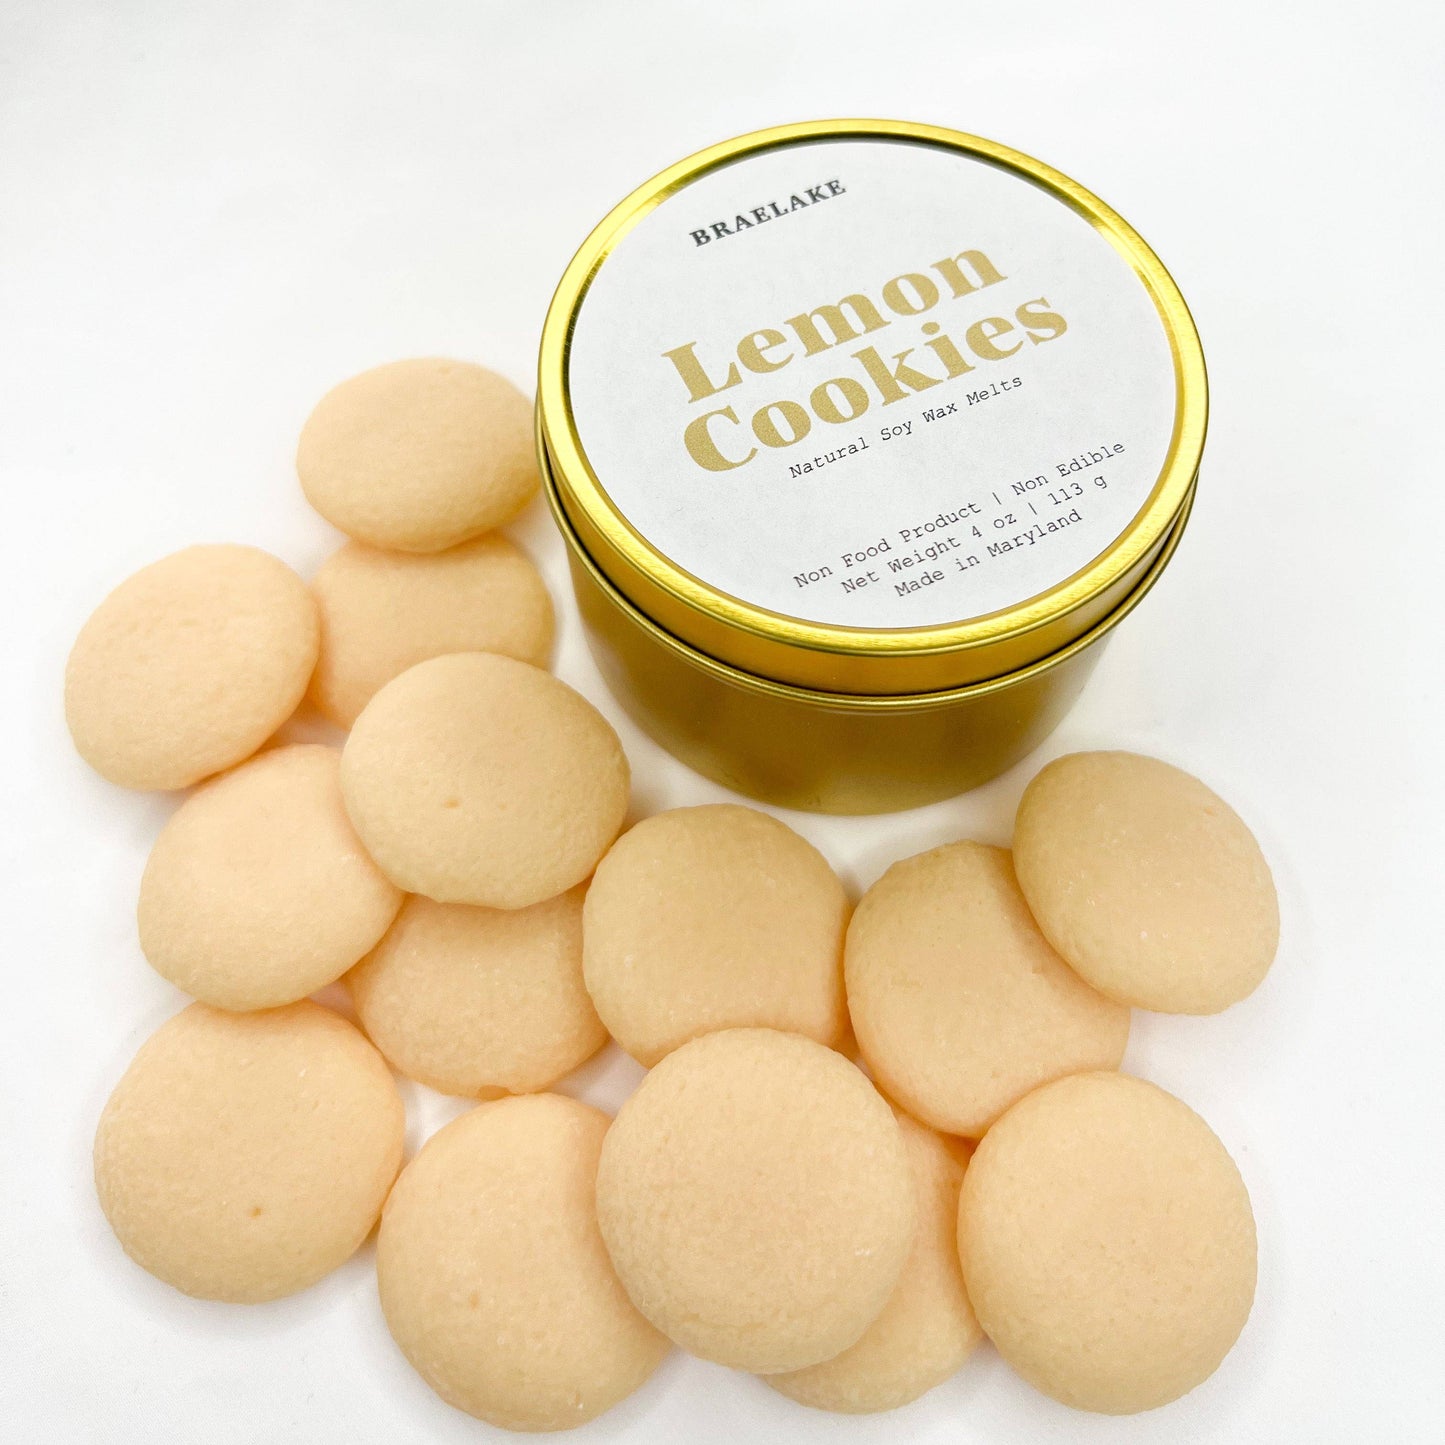 Lemon Cookies Wax Melts (4 oz)